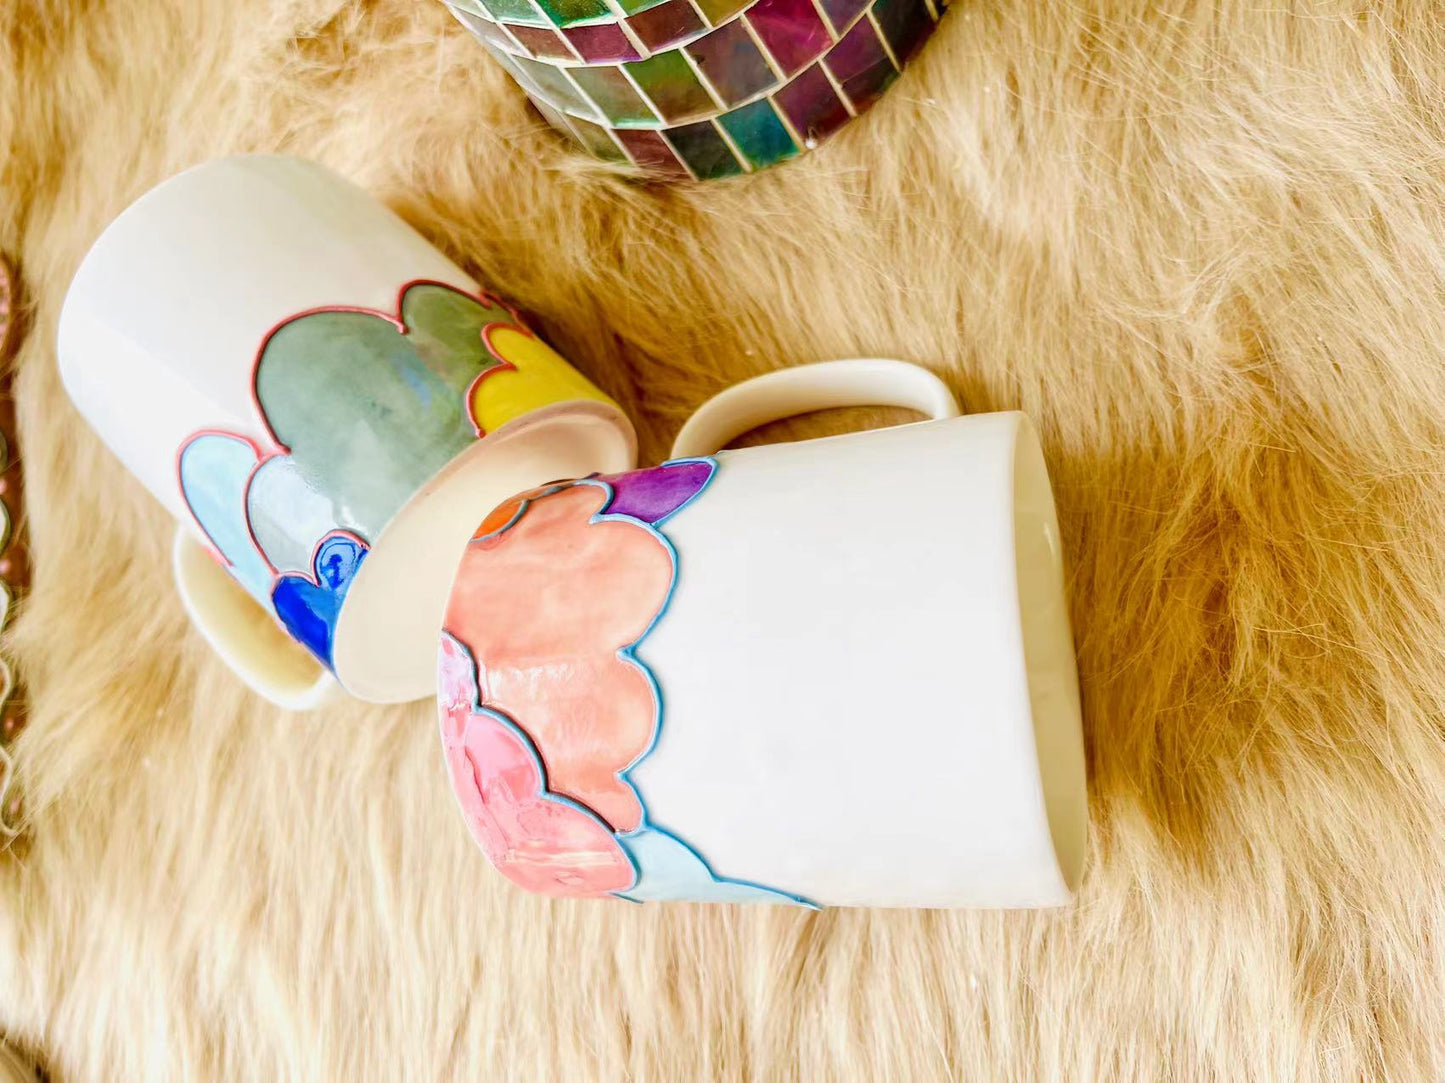 Colorful Cloud Ceramic Coffee Mug, Personalized Handmade Pottery Mug for Gifts